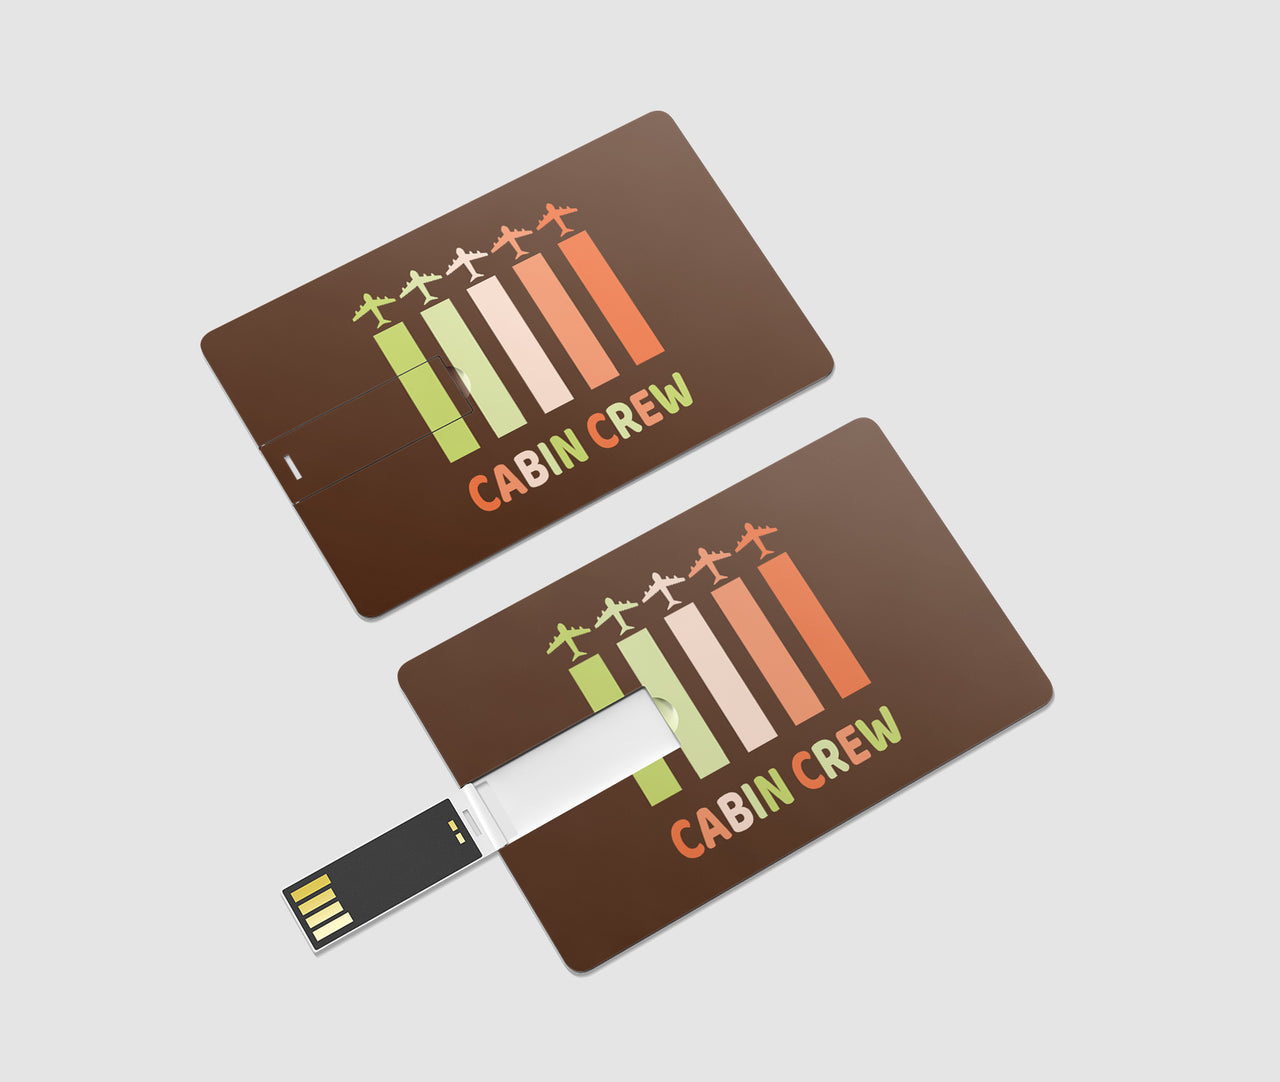 Colourful Cabin Crew Designed USB Cards